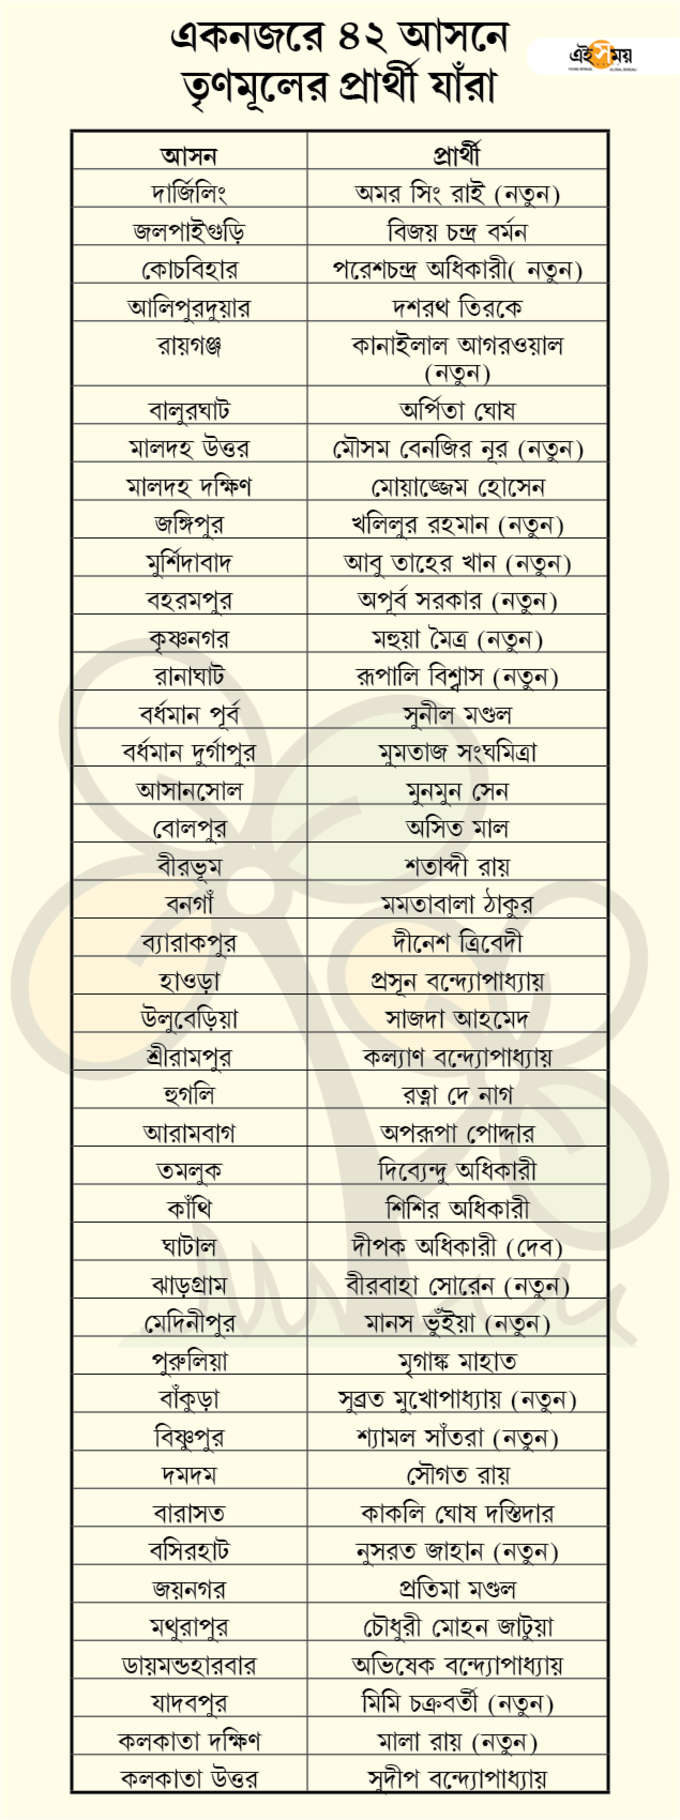 TMC list of Candidates